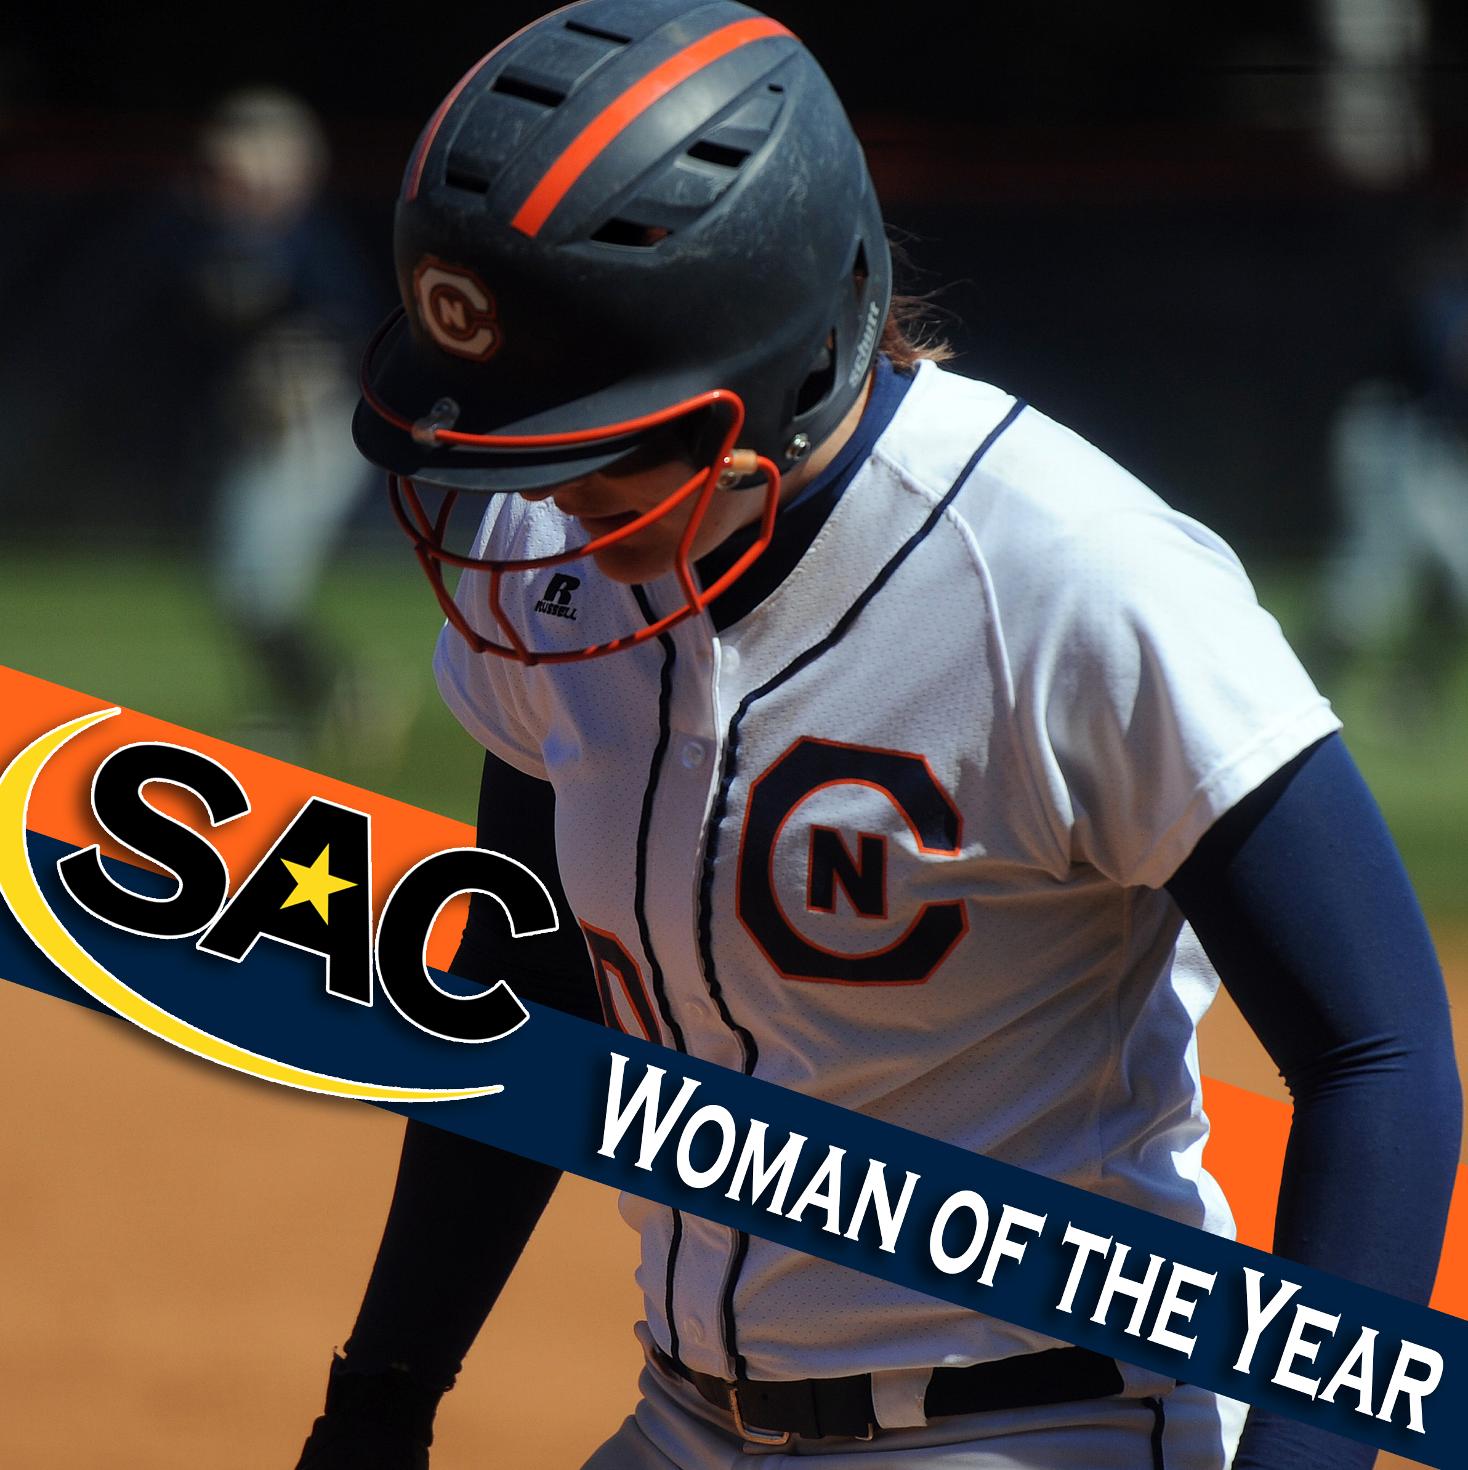 Siebert named SAC Woman of the Year